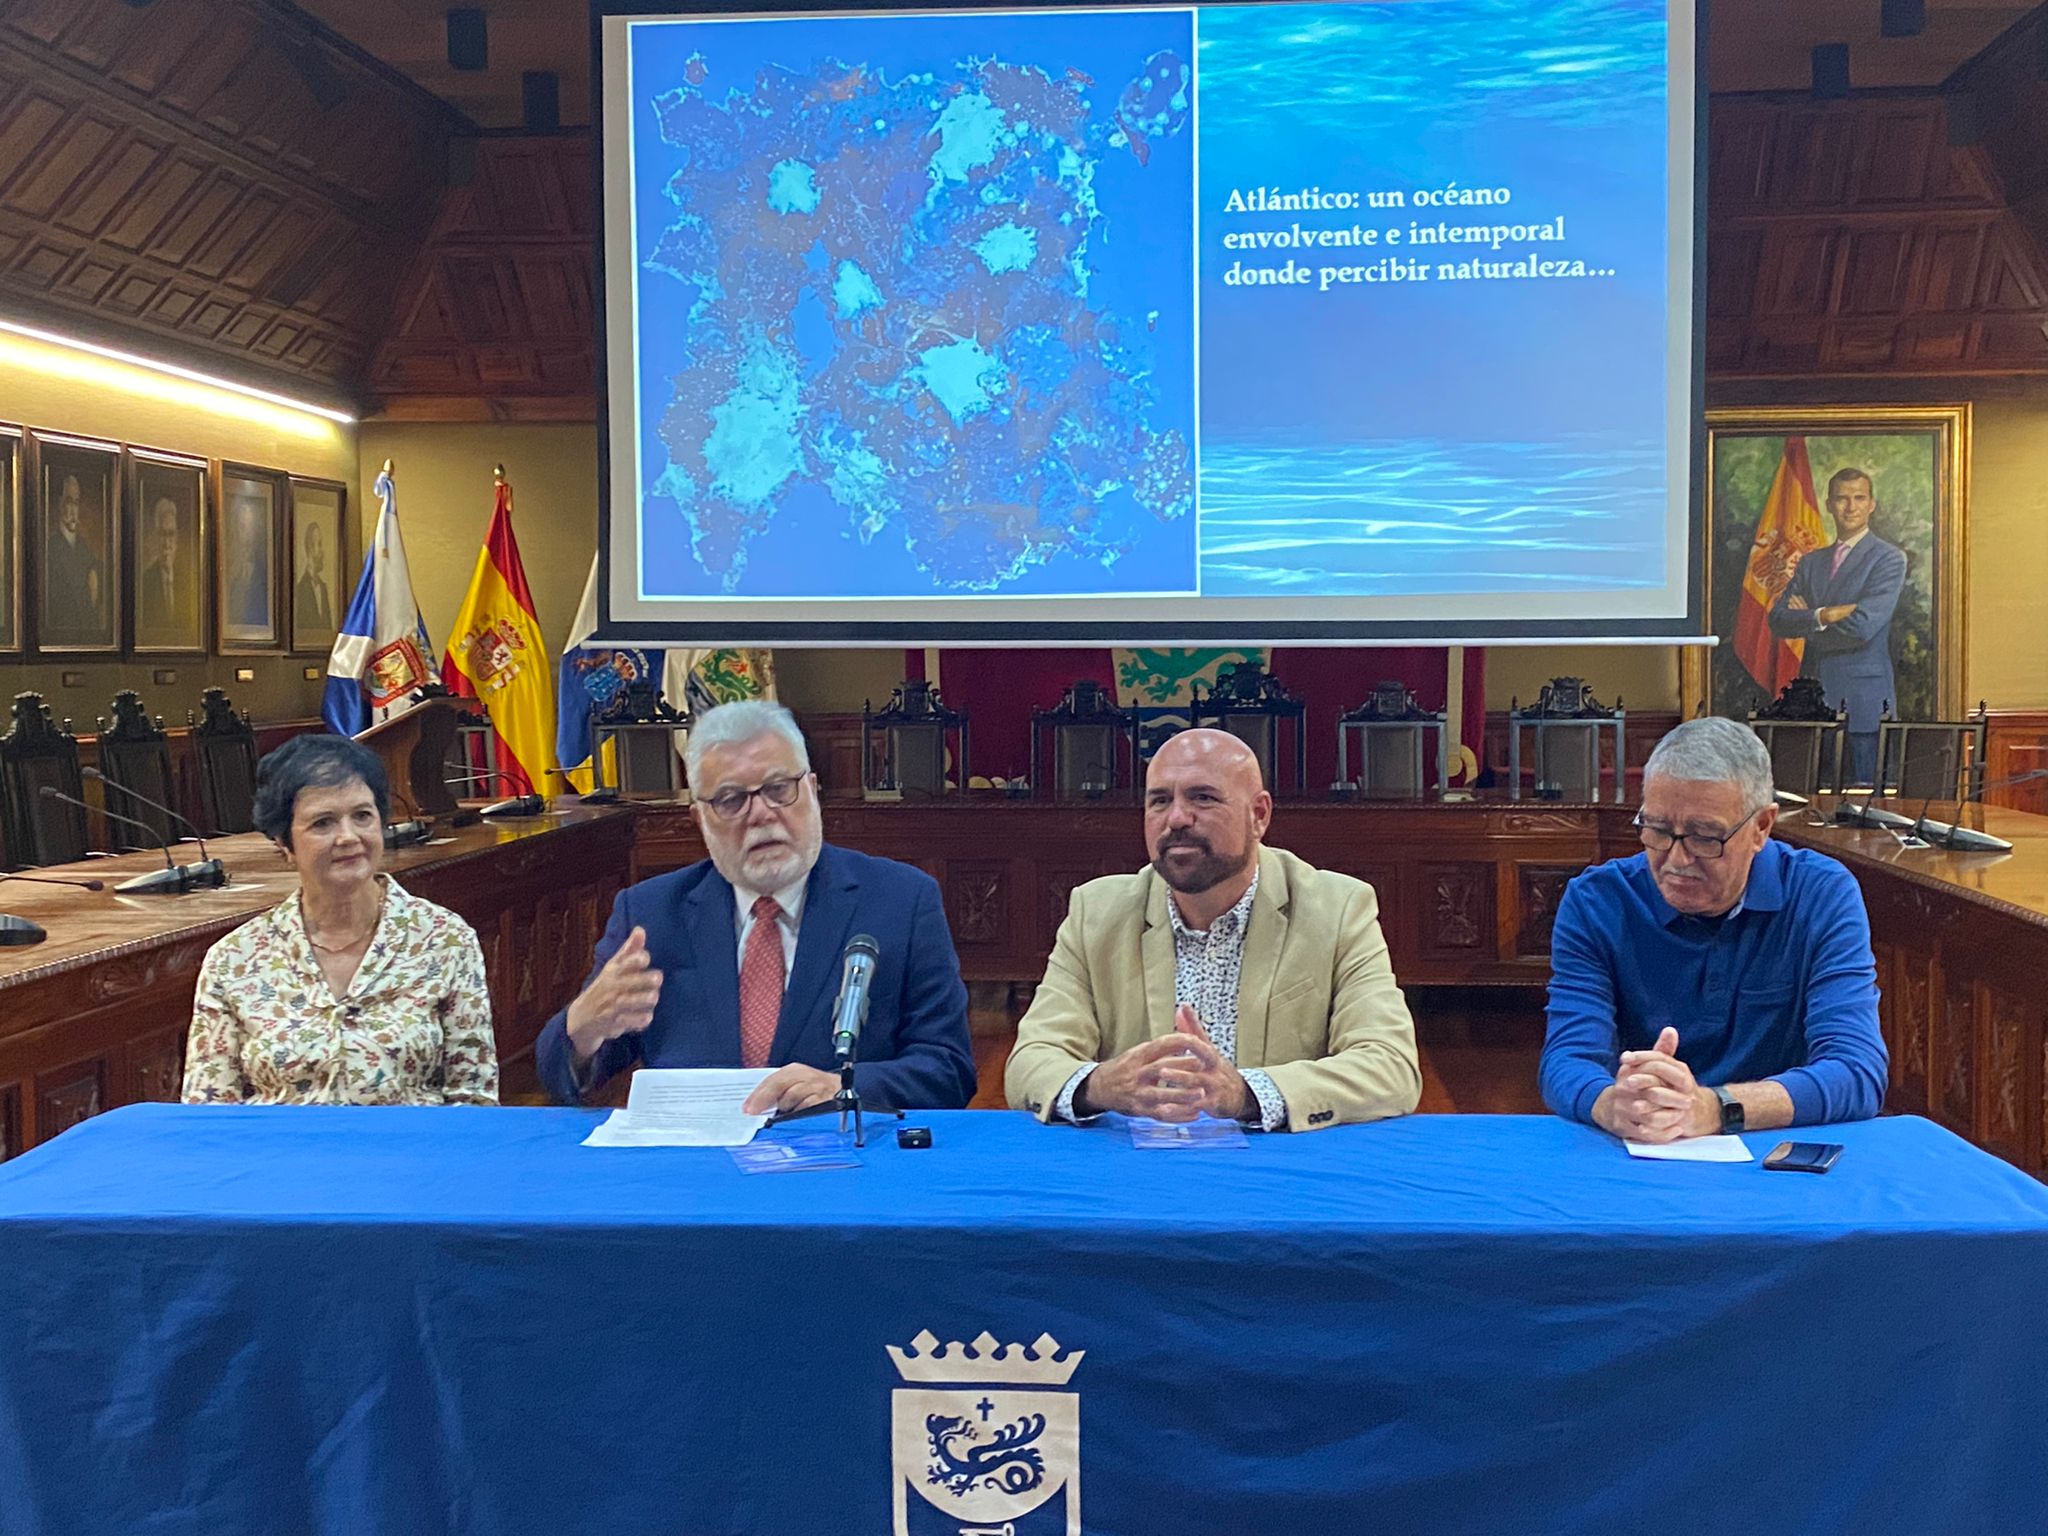 Conferencia Inaugural del Curso 2022/2023 del IEHC: «Atlántico: un océano envolvente e intemporal donde percibir naturaleza», a cargo de  María Fátima Hernández Martín (12/10/2022)